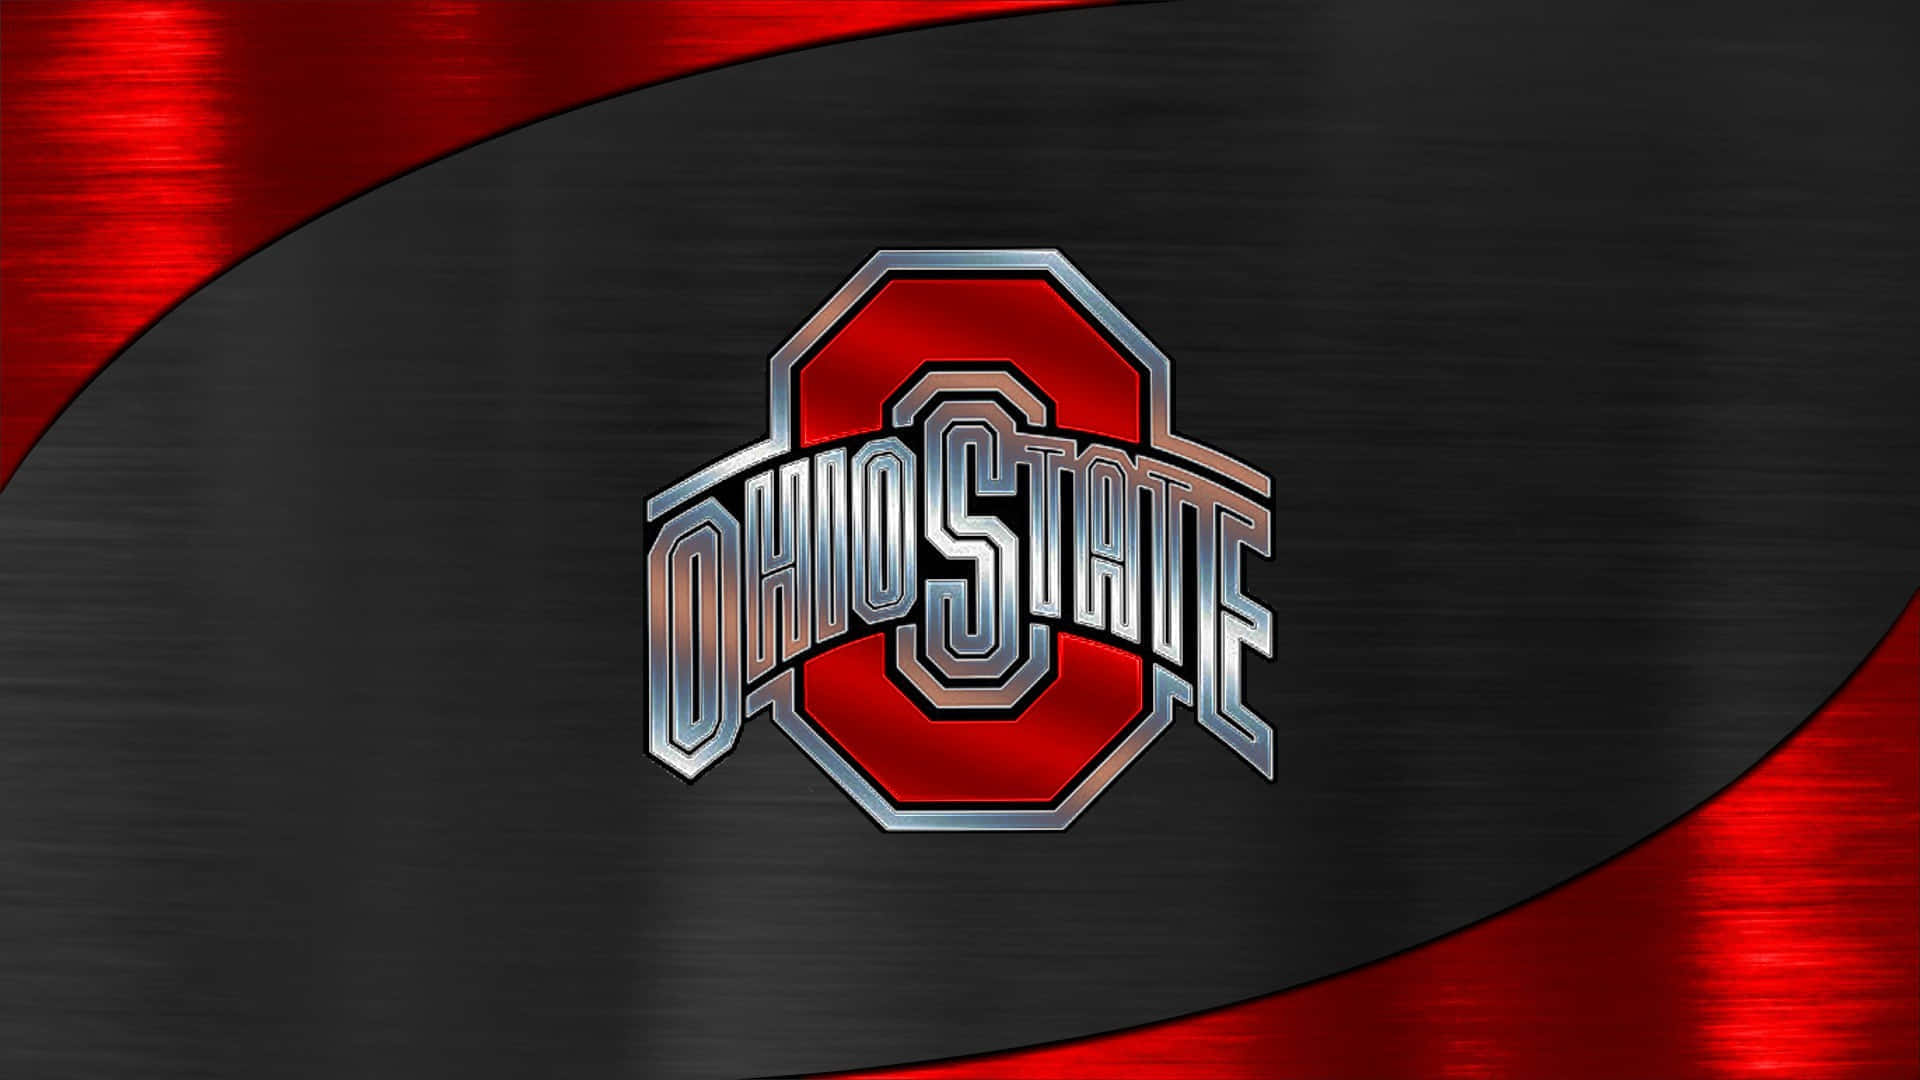 Ohio State flag and emblem